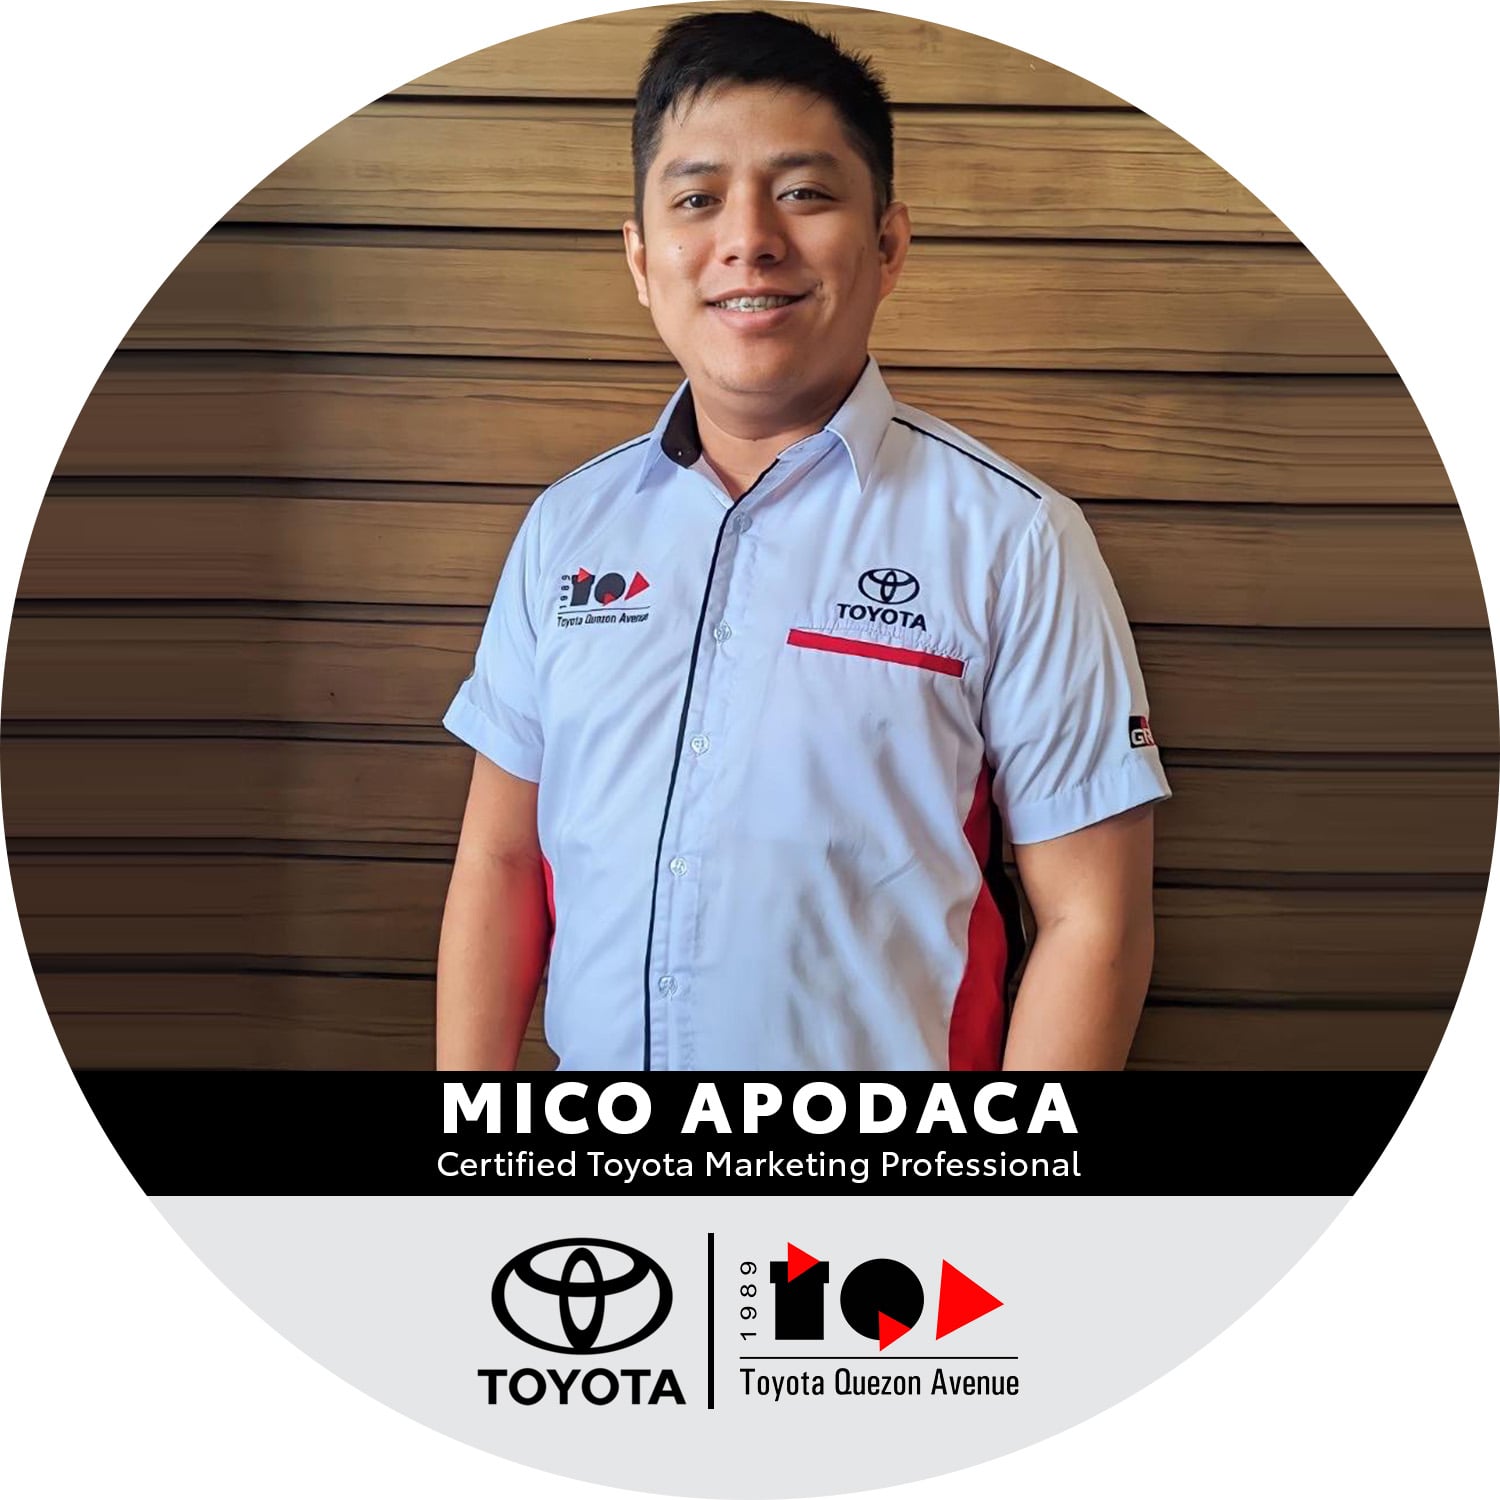 Certified Toyota Marketing Professionals - Mico Apodaca